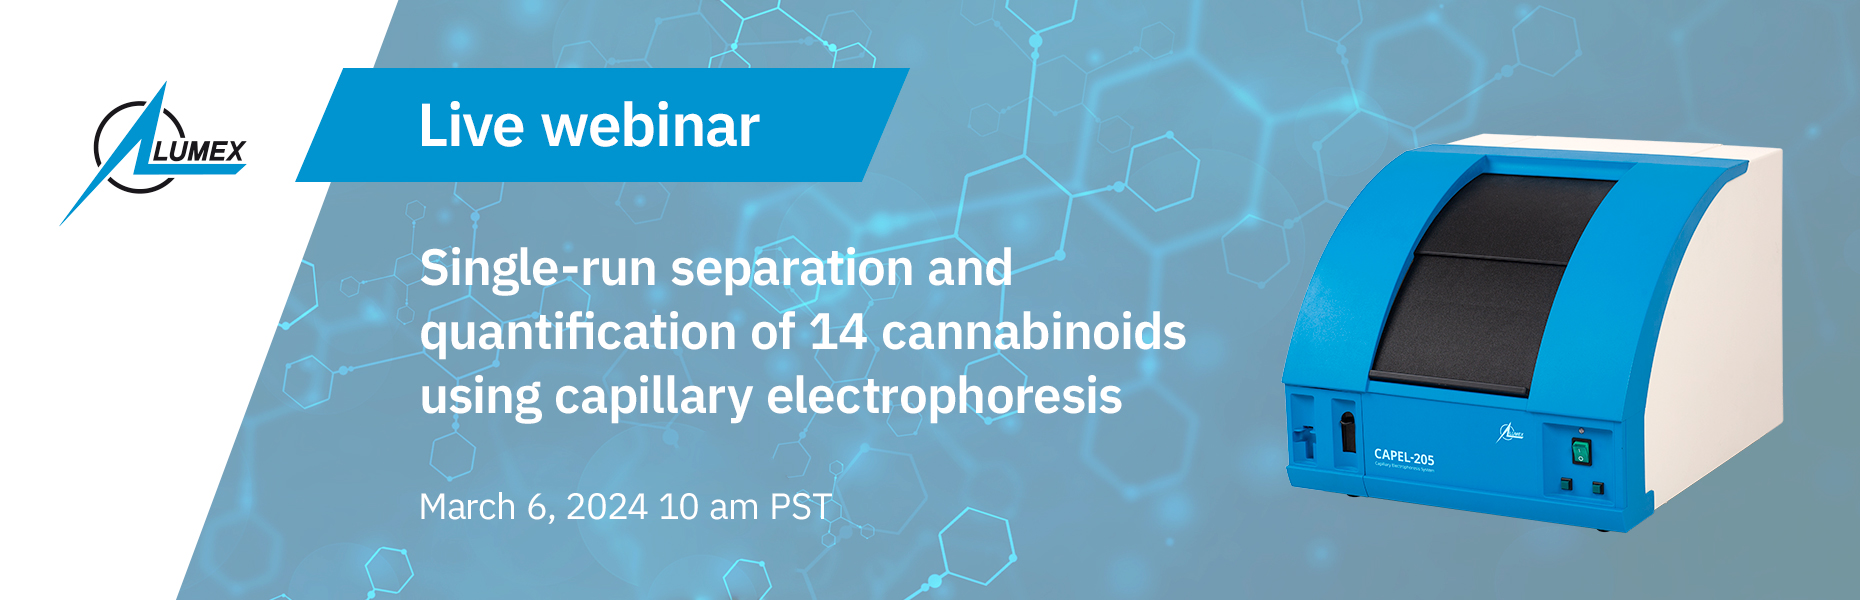 Webinar: Single-run separation and quantification of 14 cannabinoids using capillary electrophoresis